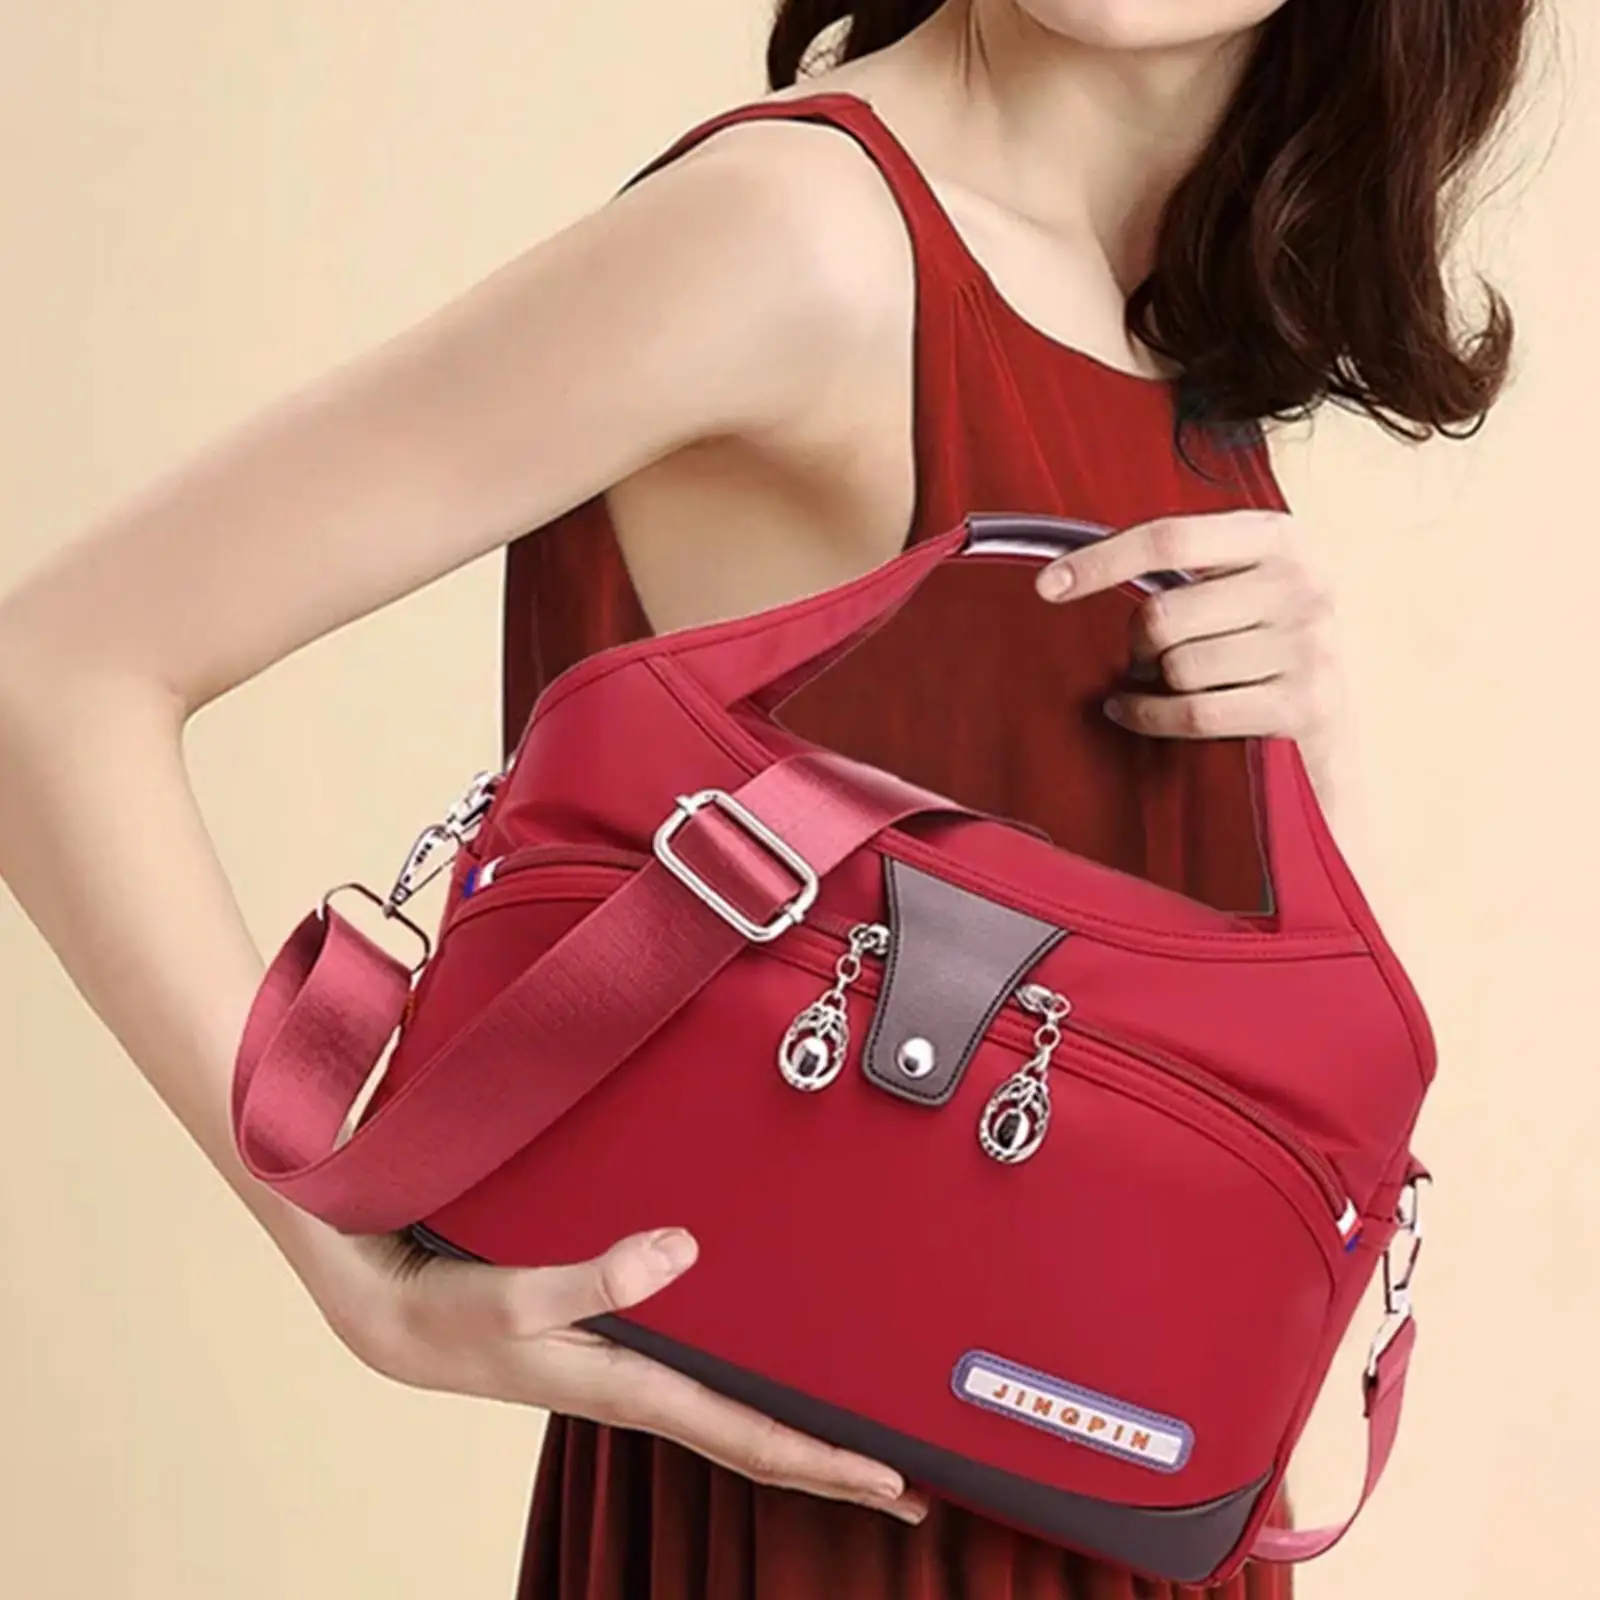 

Fashion Anti-theft Handbag Women Large Capacity Zipper Waterproof Shoulder Tote Large Handbag With Compartments Multi Bag B S4m1